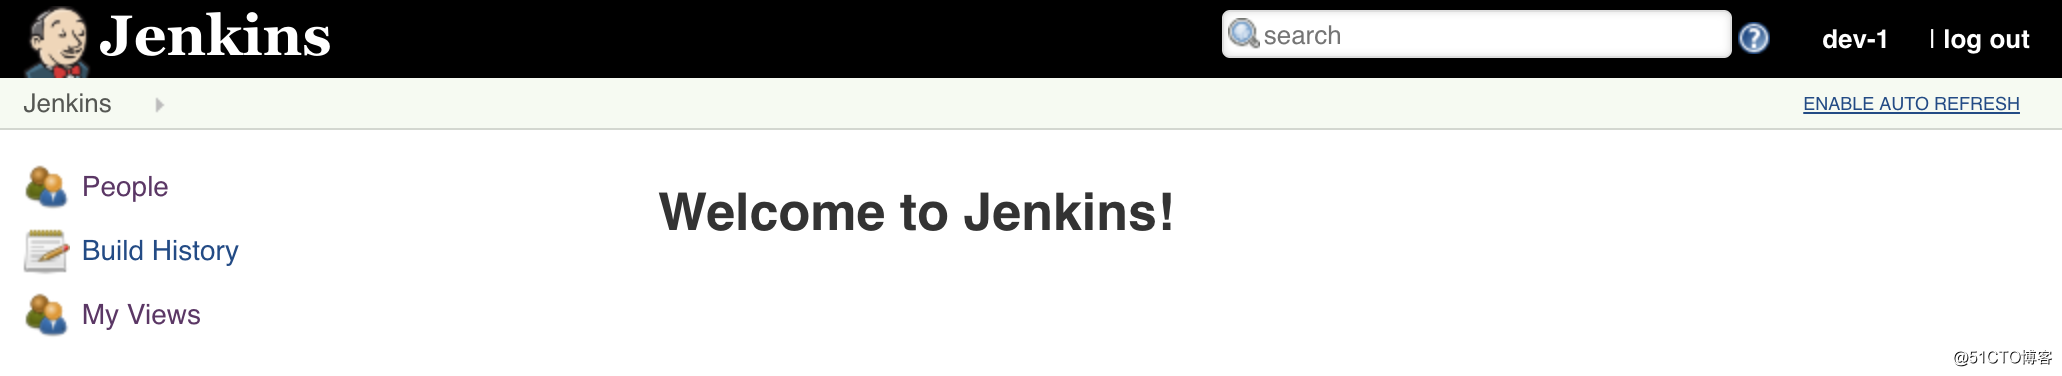 Jenkins的权限管理